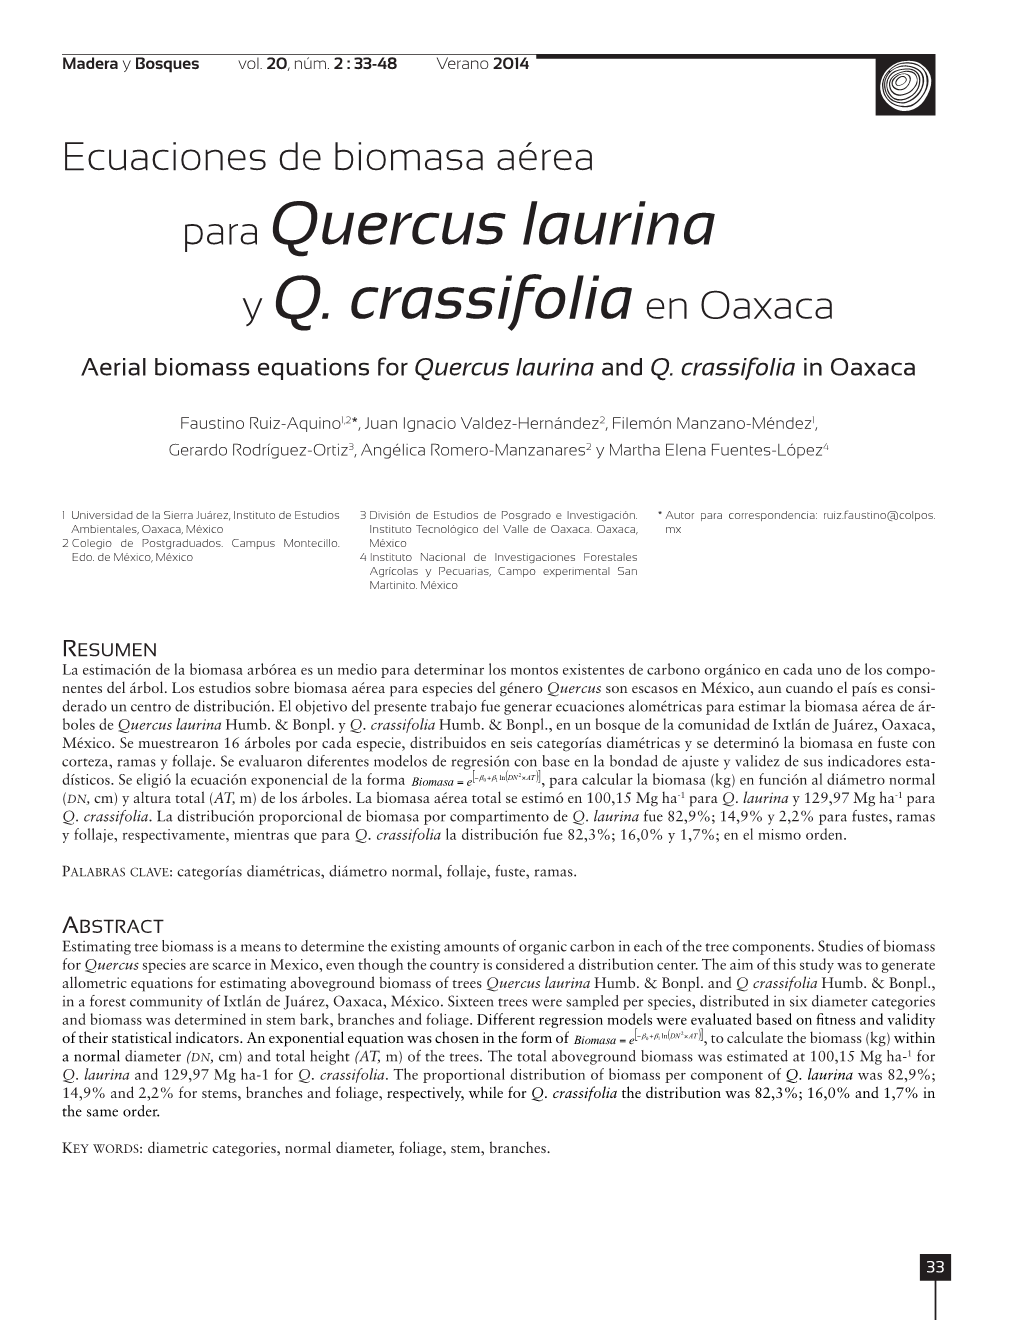 Para Quercus Laurina Y Q. Crassifoliaen Oaxaca